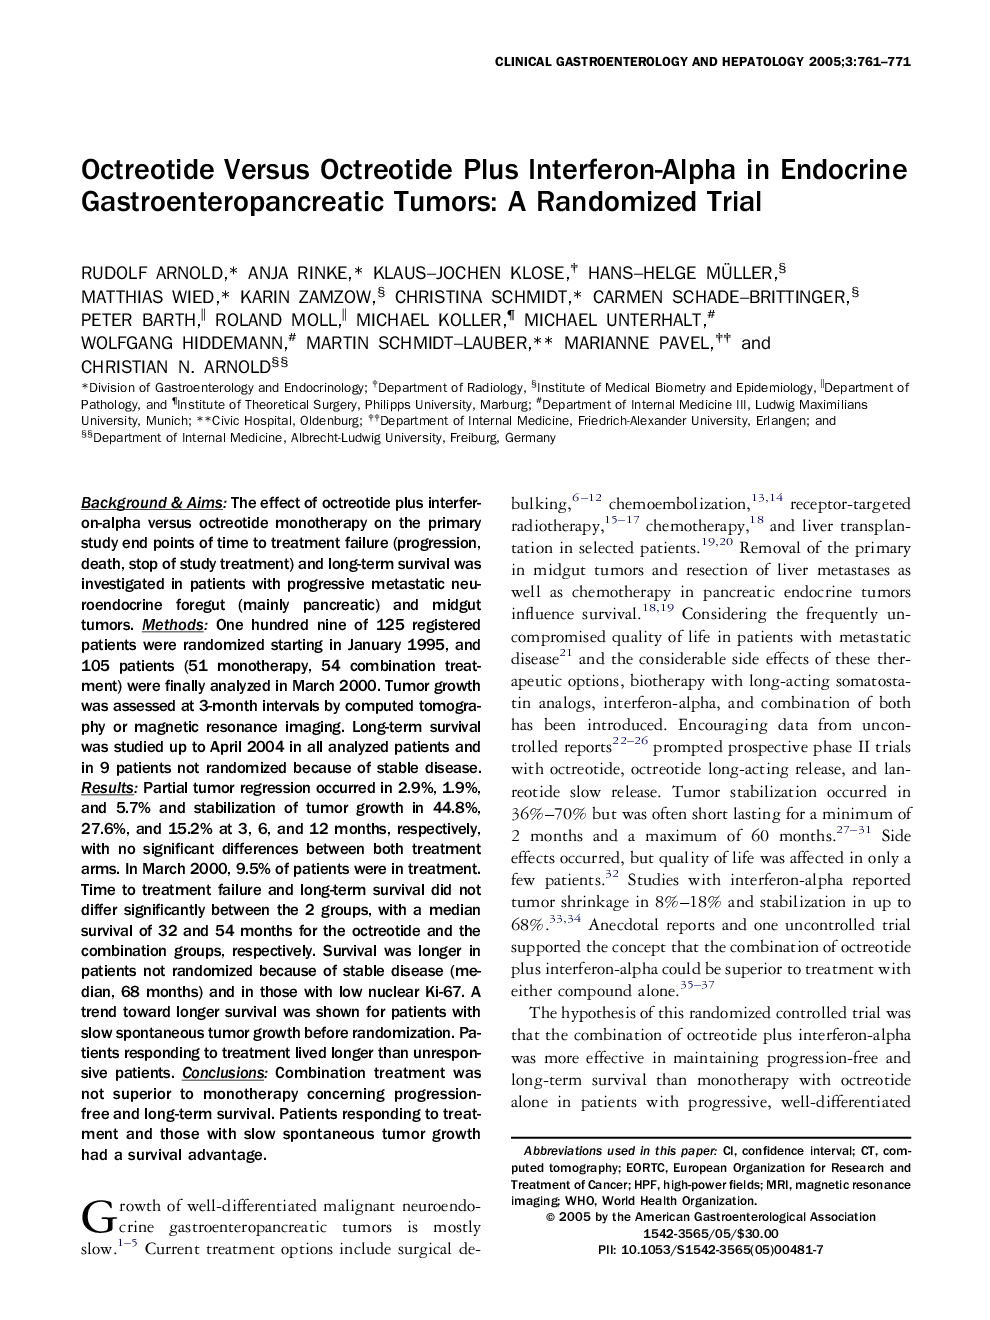 Octreotide Versus Octreotide Plus Interferon-Alpha in Endocrine Gastroenteropancreatic Tumors: A Randomized Trial